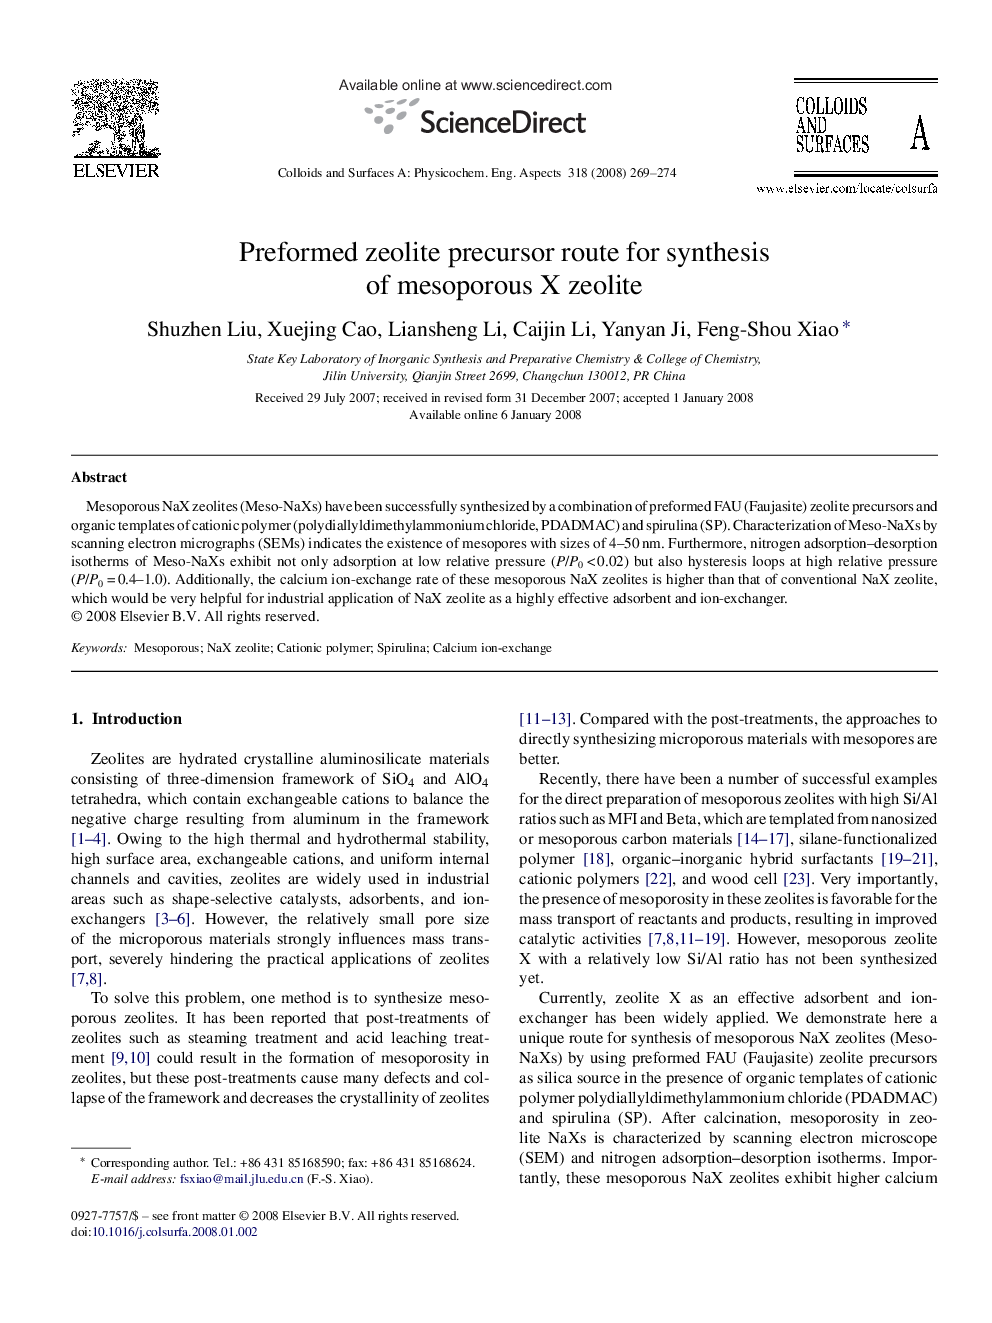 Preformed zeolite precursor route for synthesis of mesoporous X zeolite